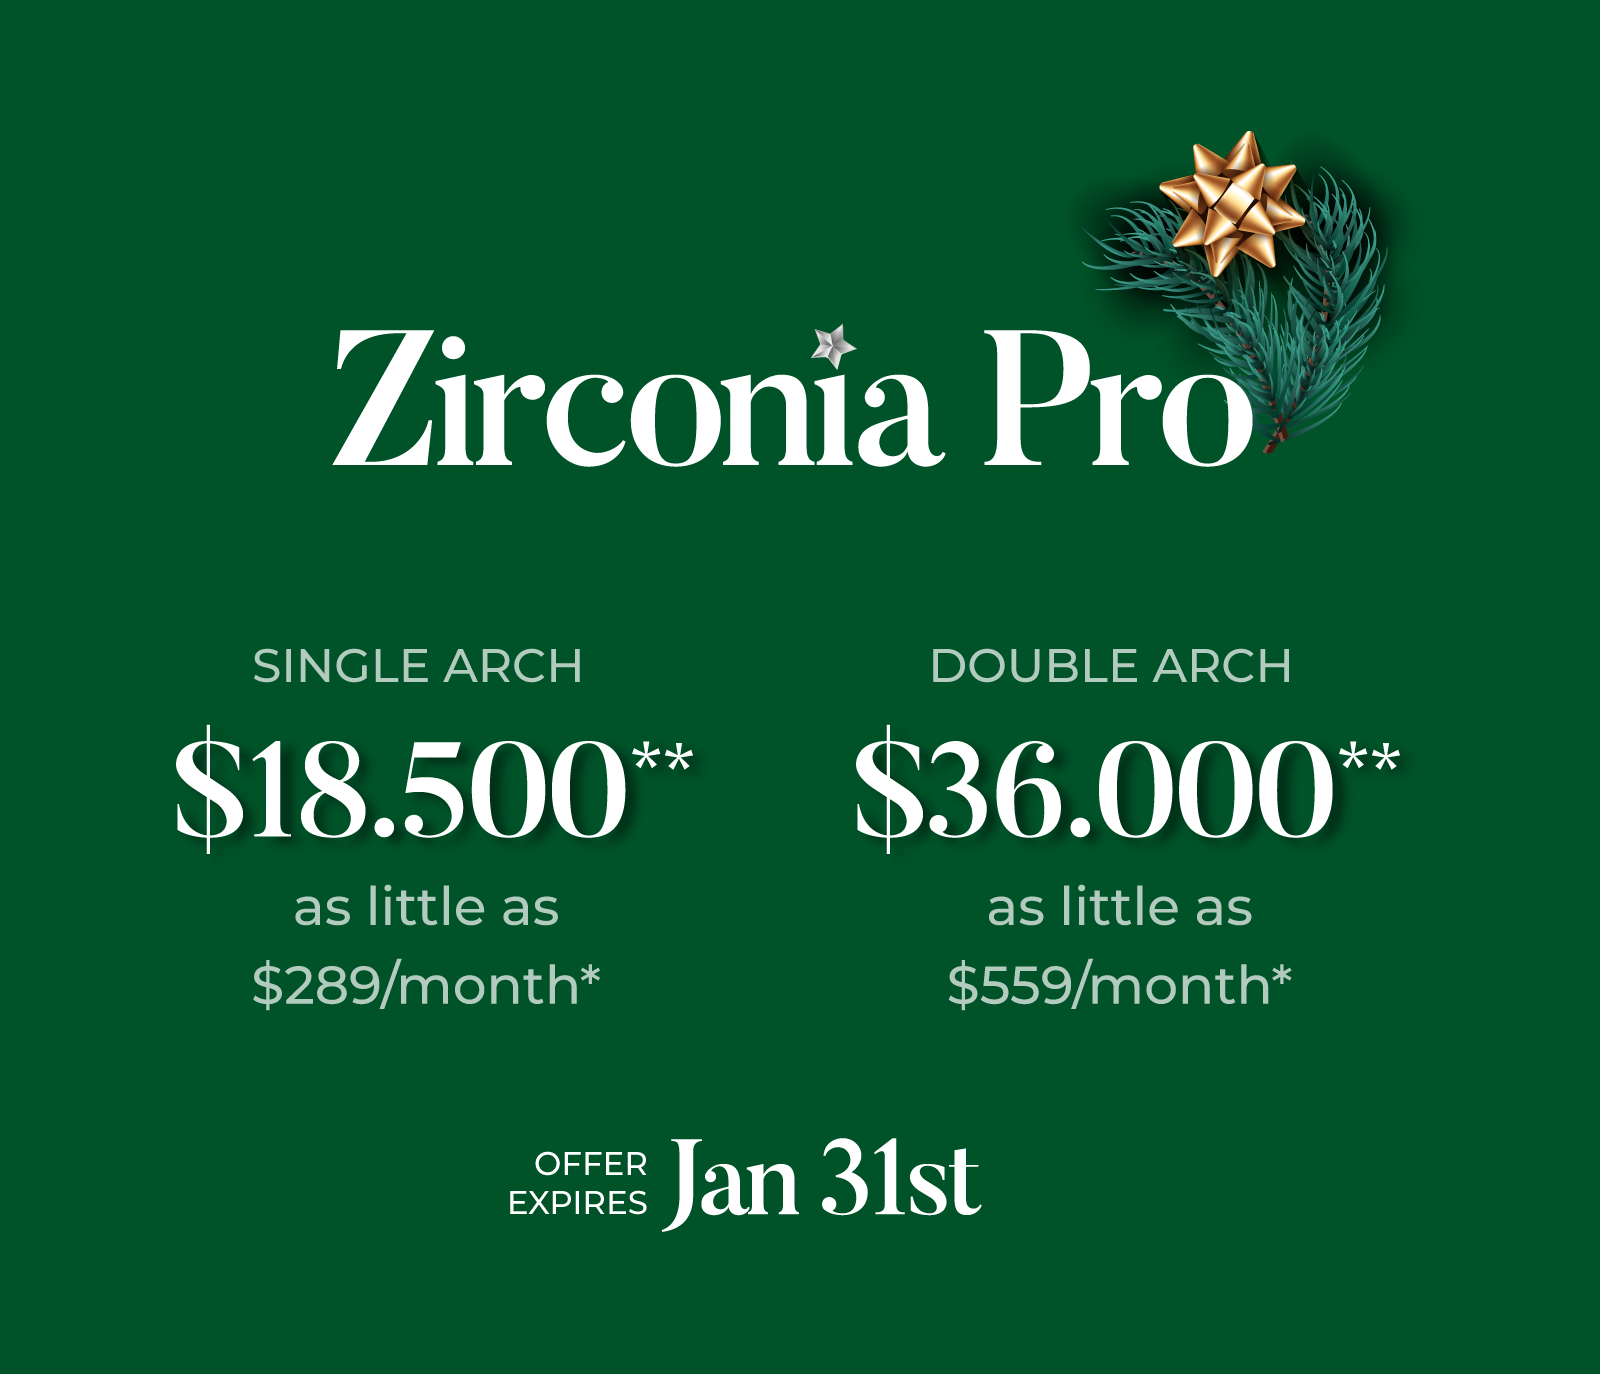 All Zirconia Pro Pricing